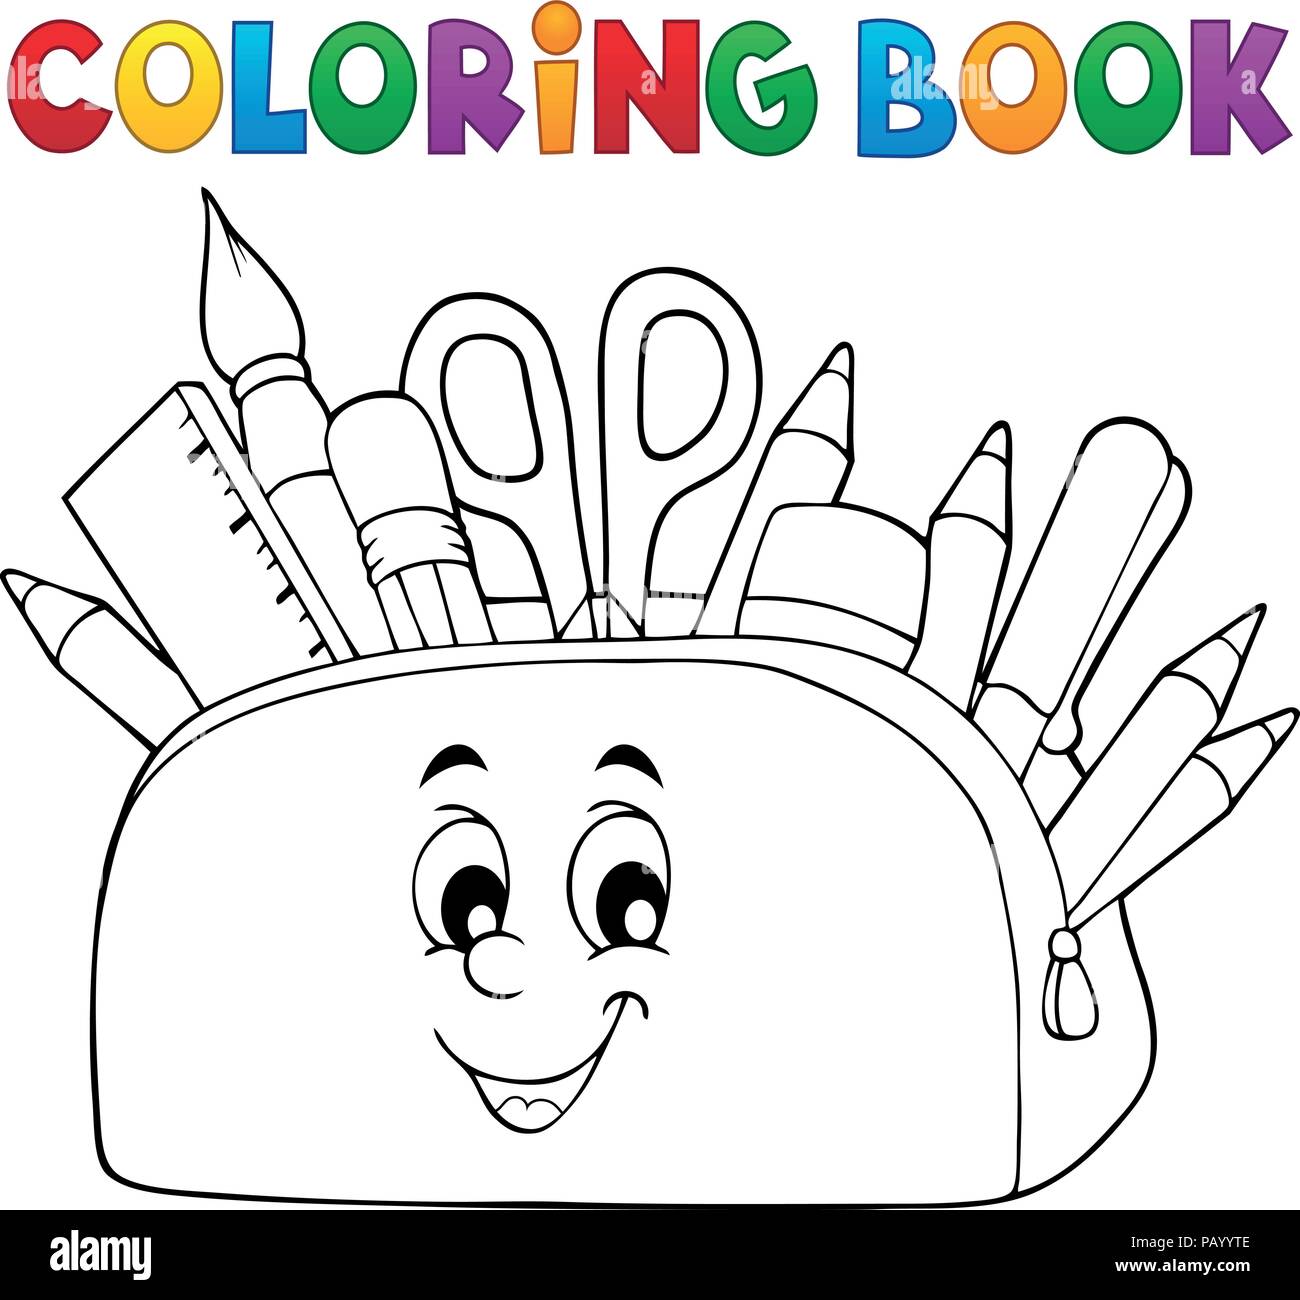 Coloring book pencil case theme 2 - eps10 vector illustration